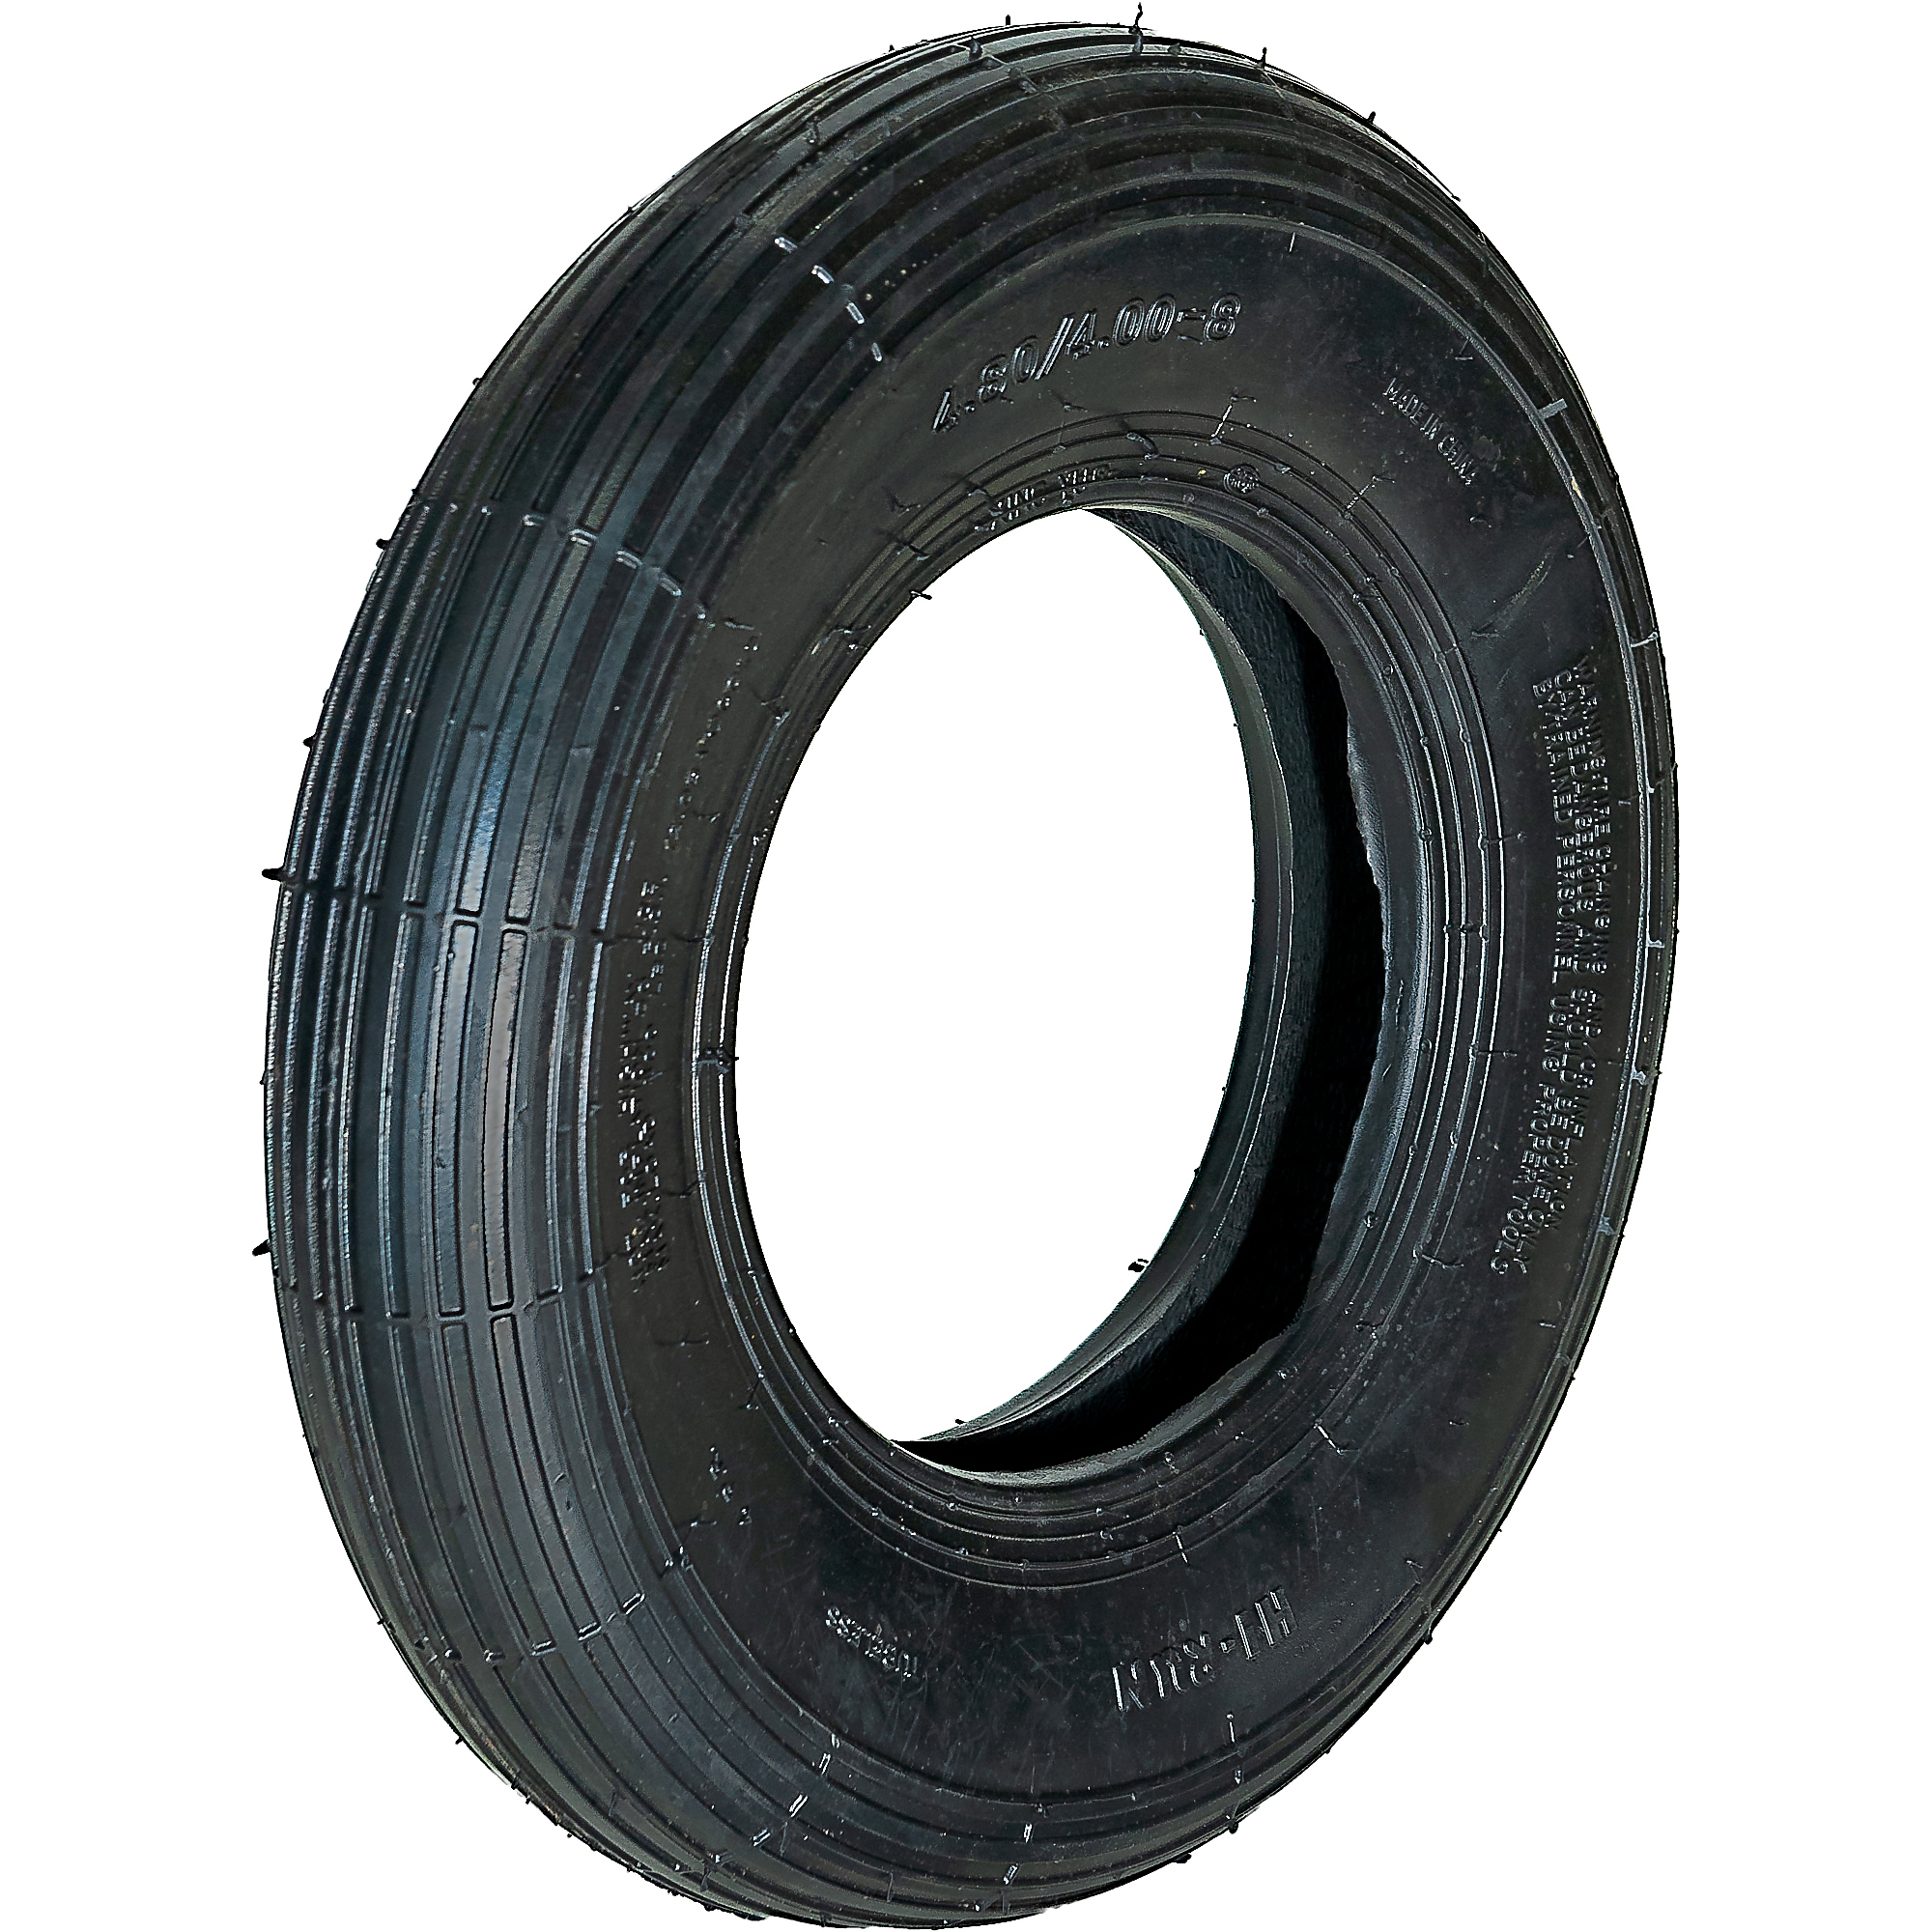 HI-RUN, Wheel Barrow Tire, 4 ply, Rib, Tire Size 4.80/4.00-8 Load Range Rating B, Model CT1003